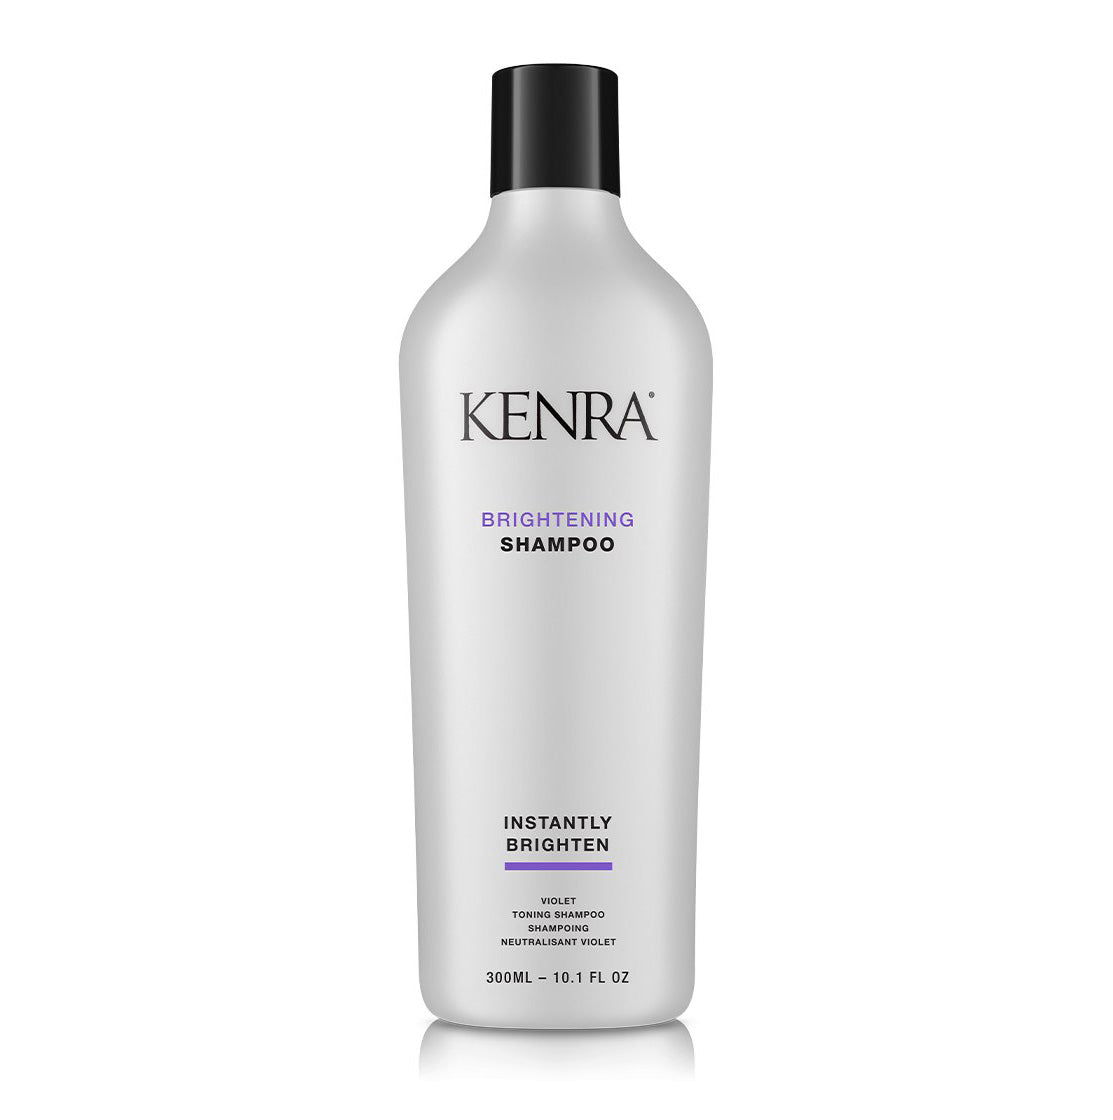 Kenra Brightening Shampoo 300ML